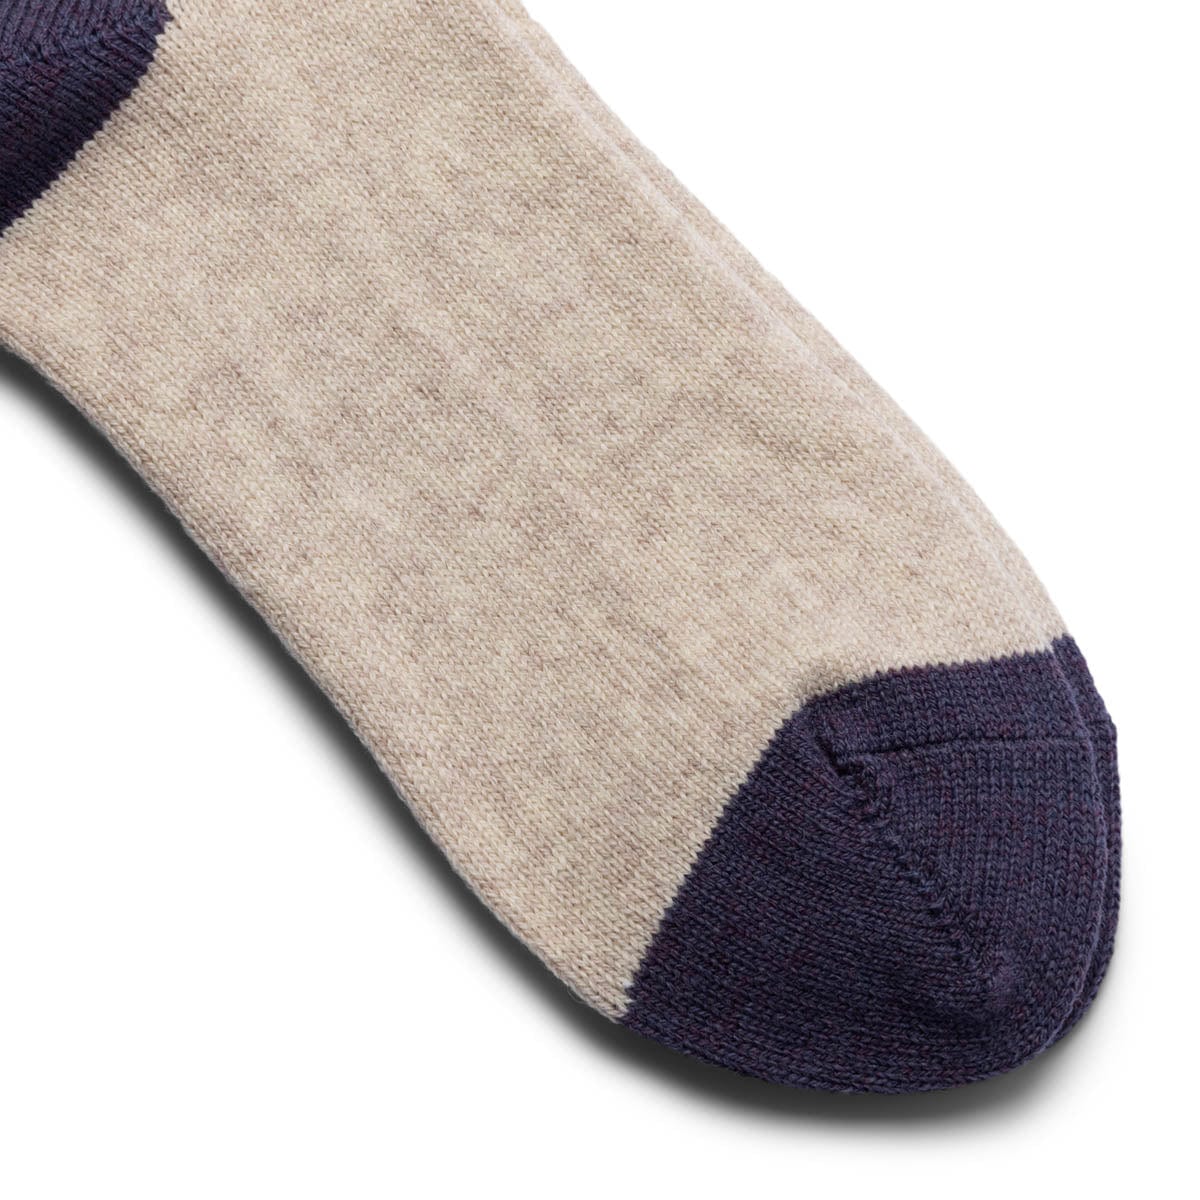 Cheap Juzsports Jordan Outlet Socks CREAM - WT05 / O/S X TODD SNYDER CHUUP MATCHING SWEATER SOCK